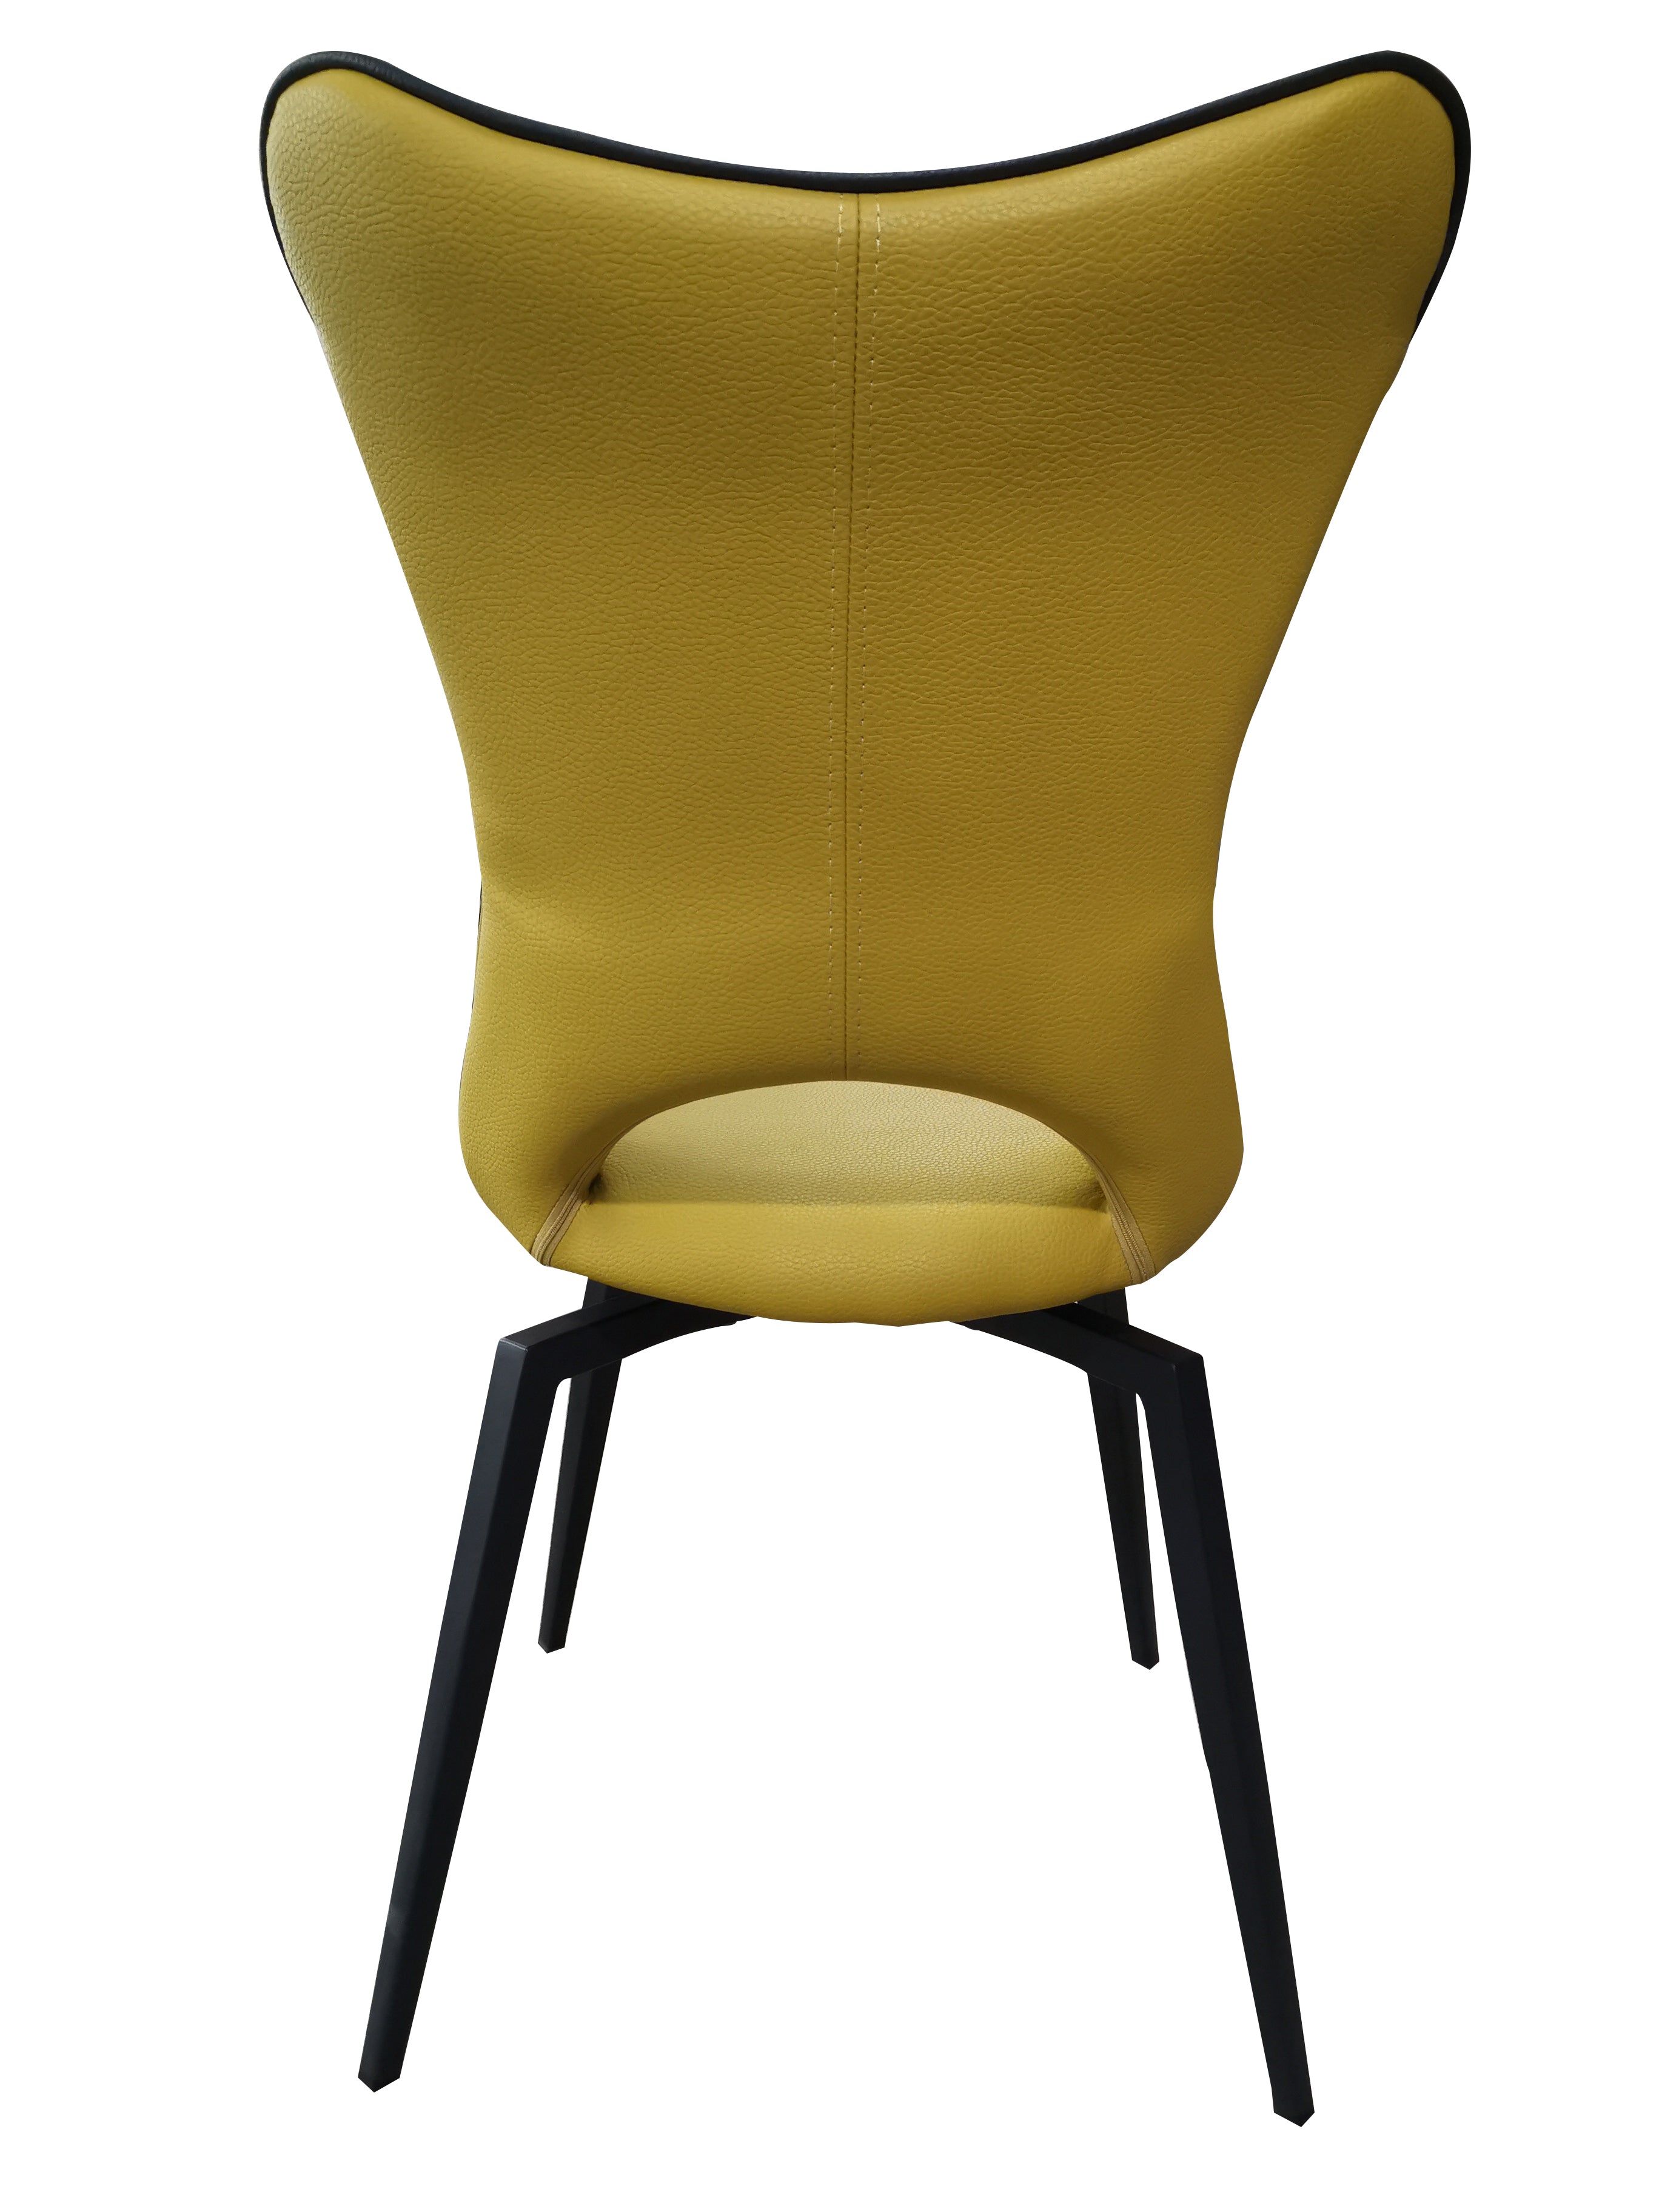 Chaise jaune moutarde pivotante design pieds métal - Holga